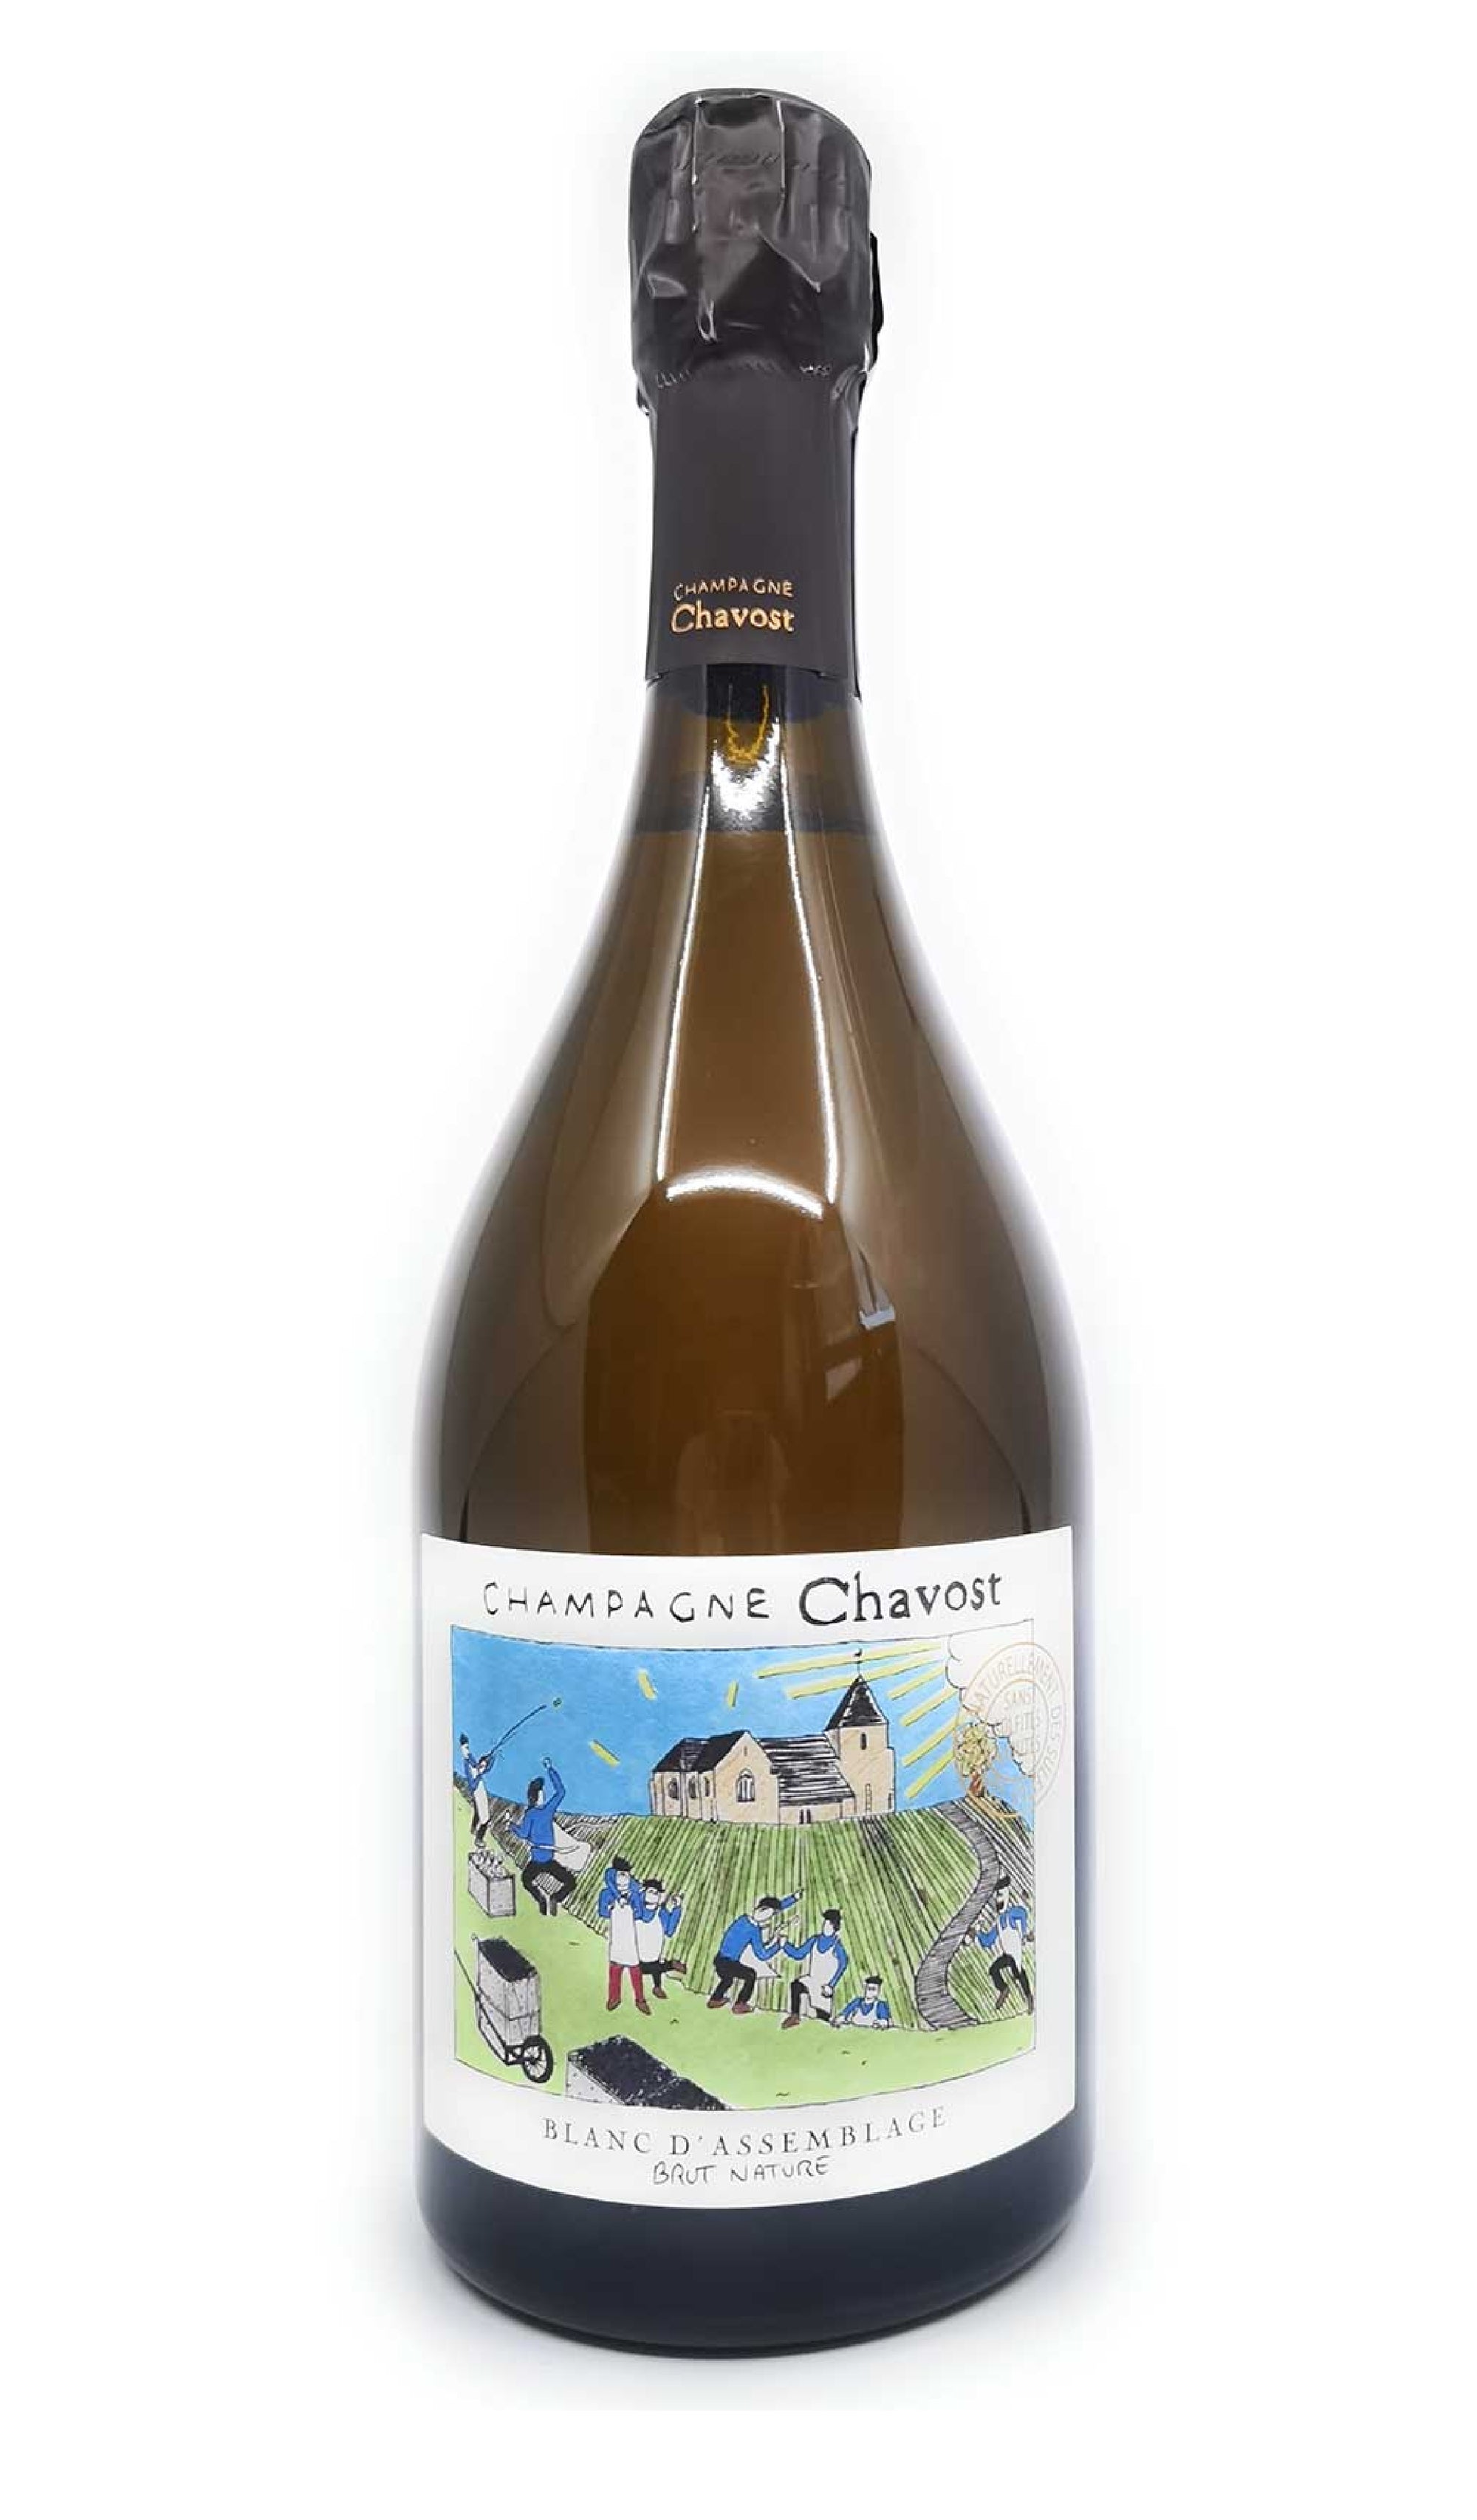 Chavost - “Blanc d’ Assemblage” Champagne Brut Nature NV (750ml)